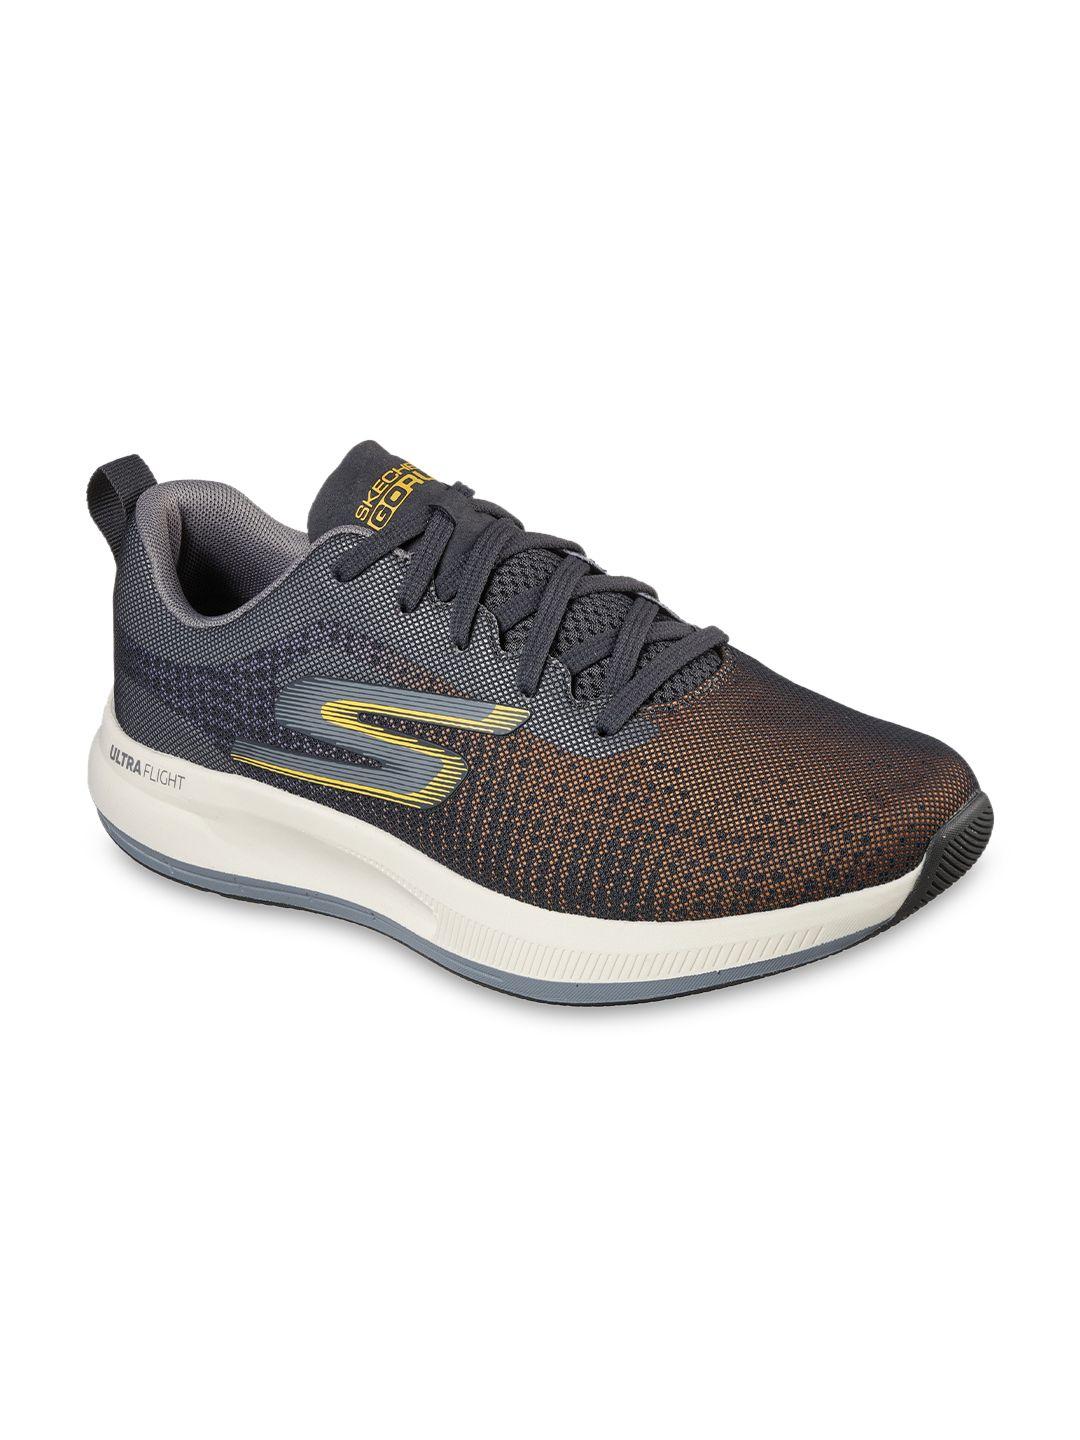 skechers-men-charcoal-sports-shoes